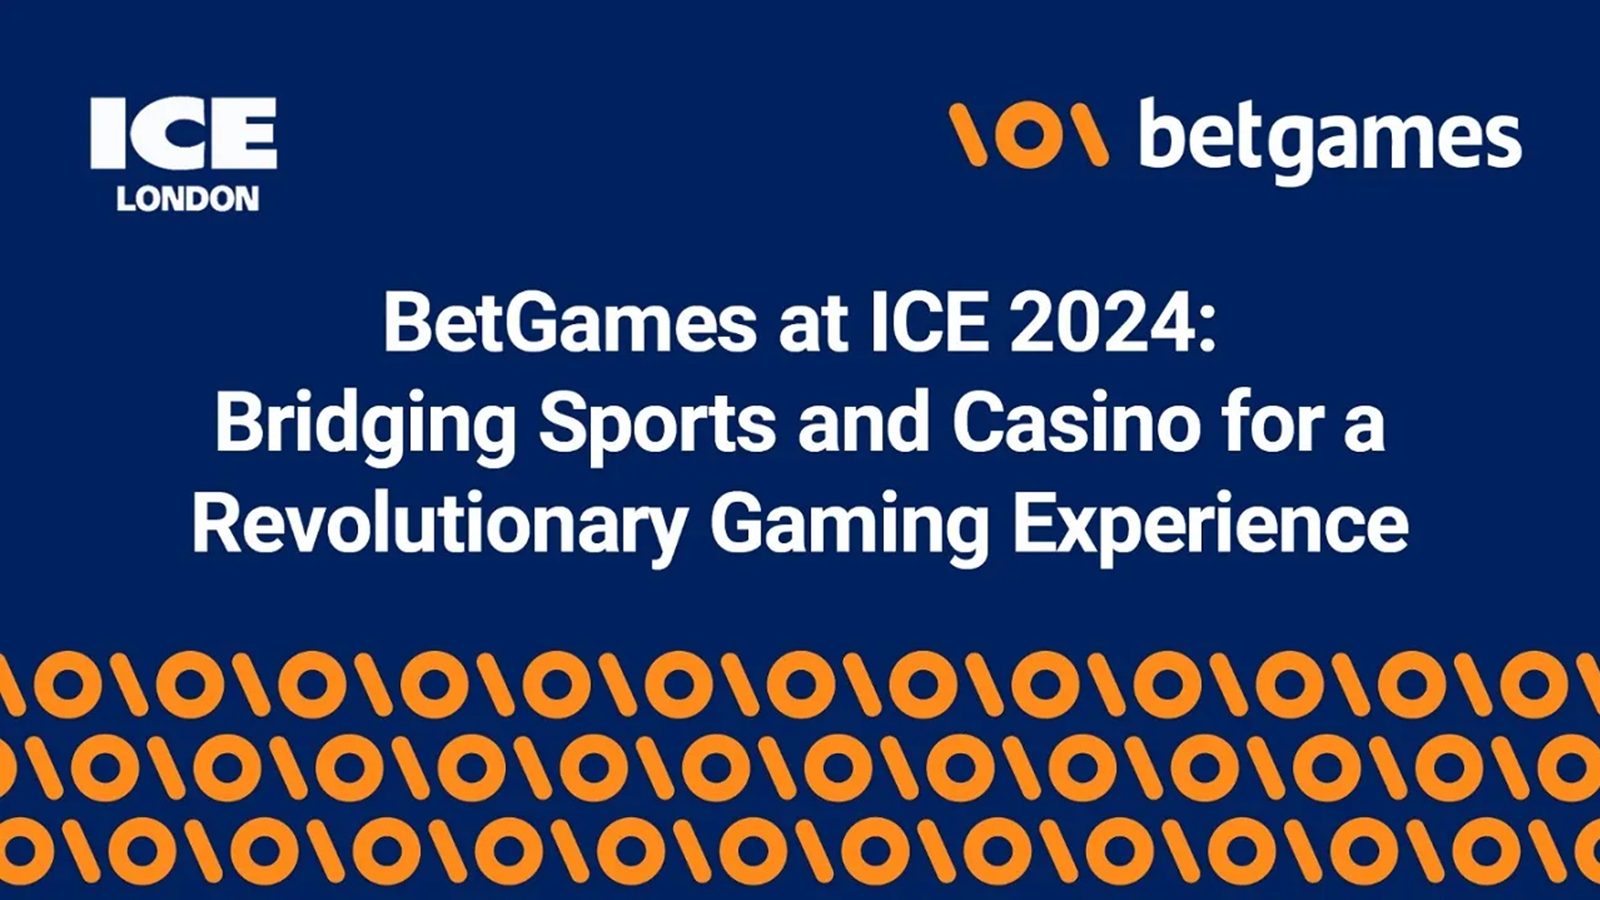 BetGames Portfolio at ICE London 2024